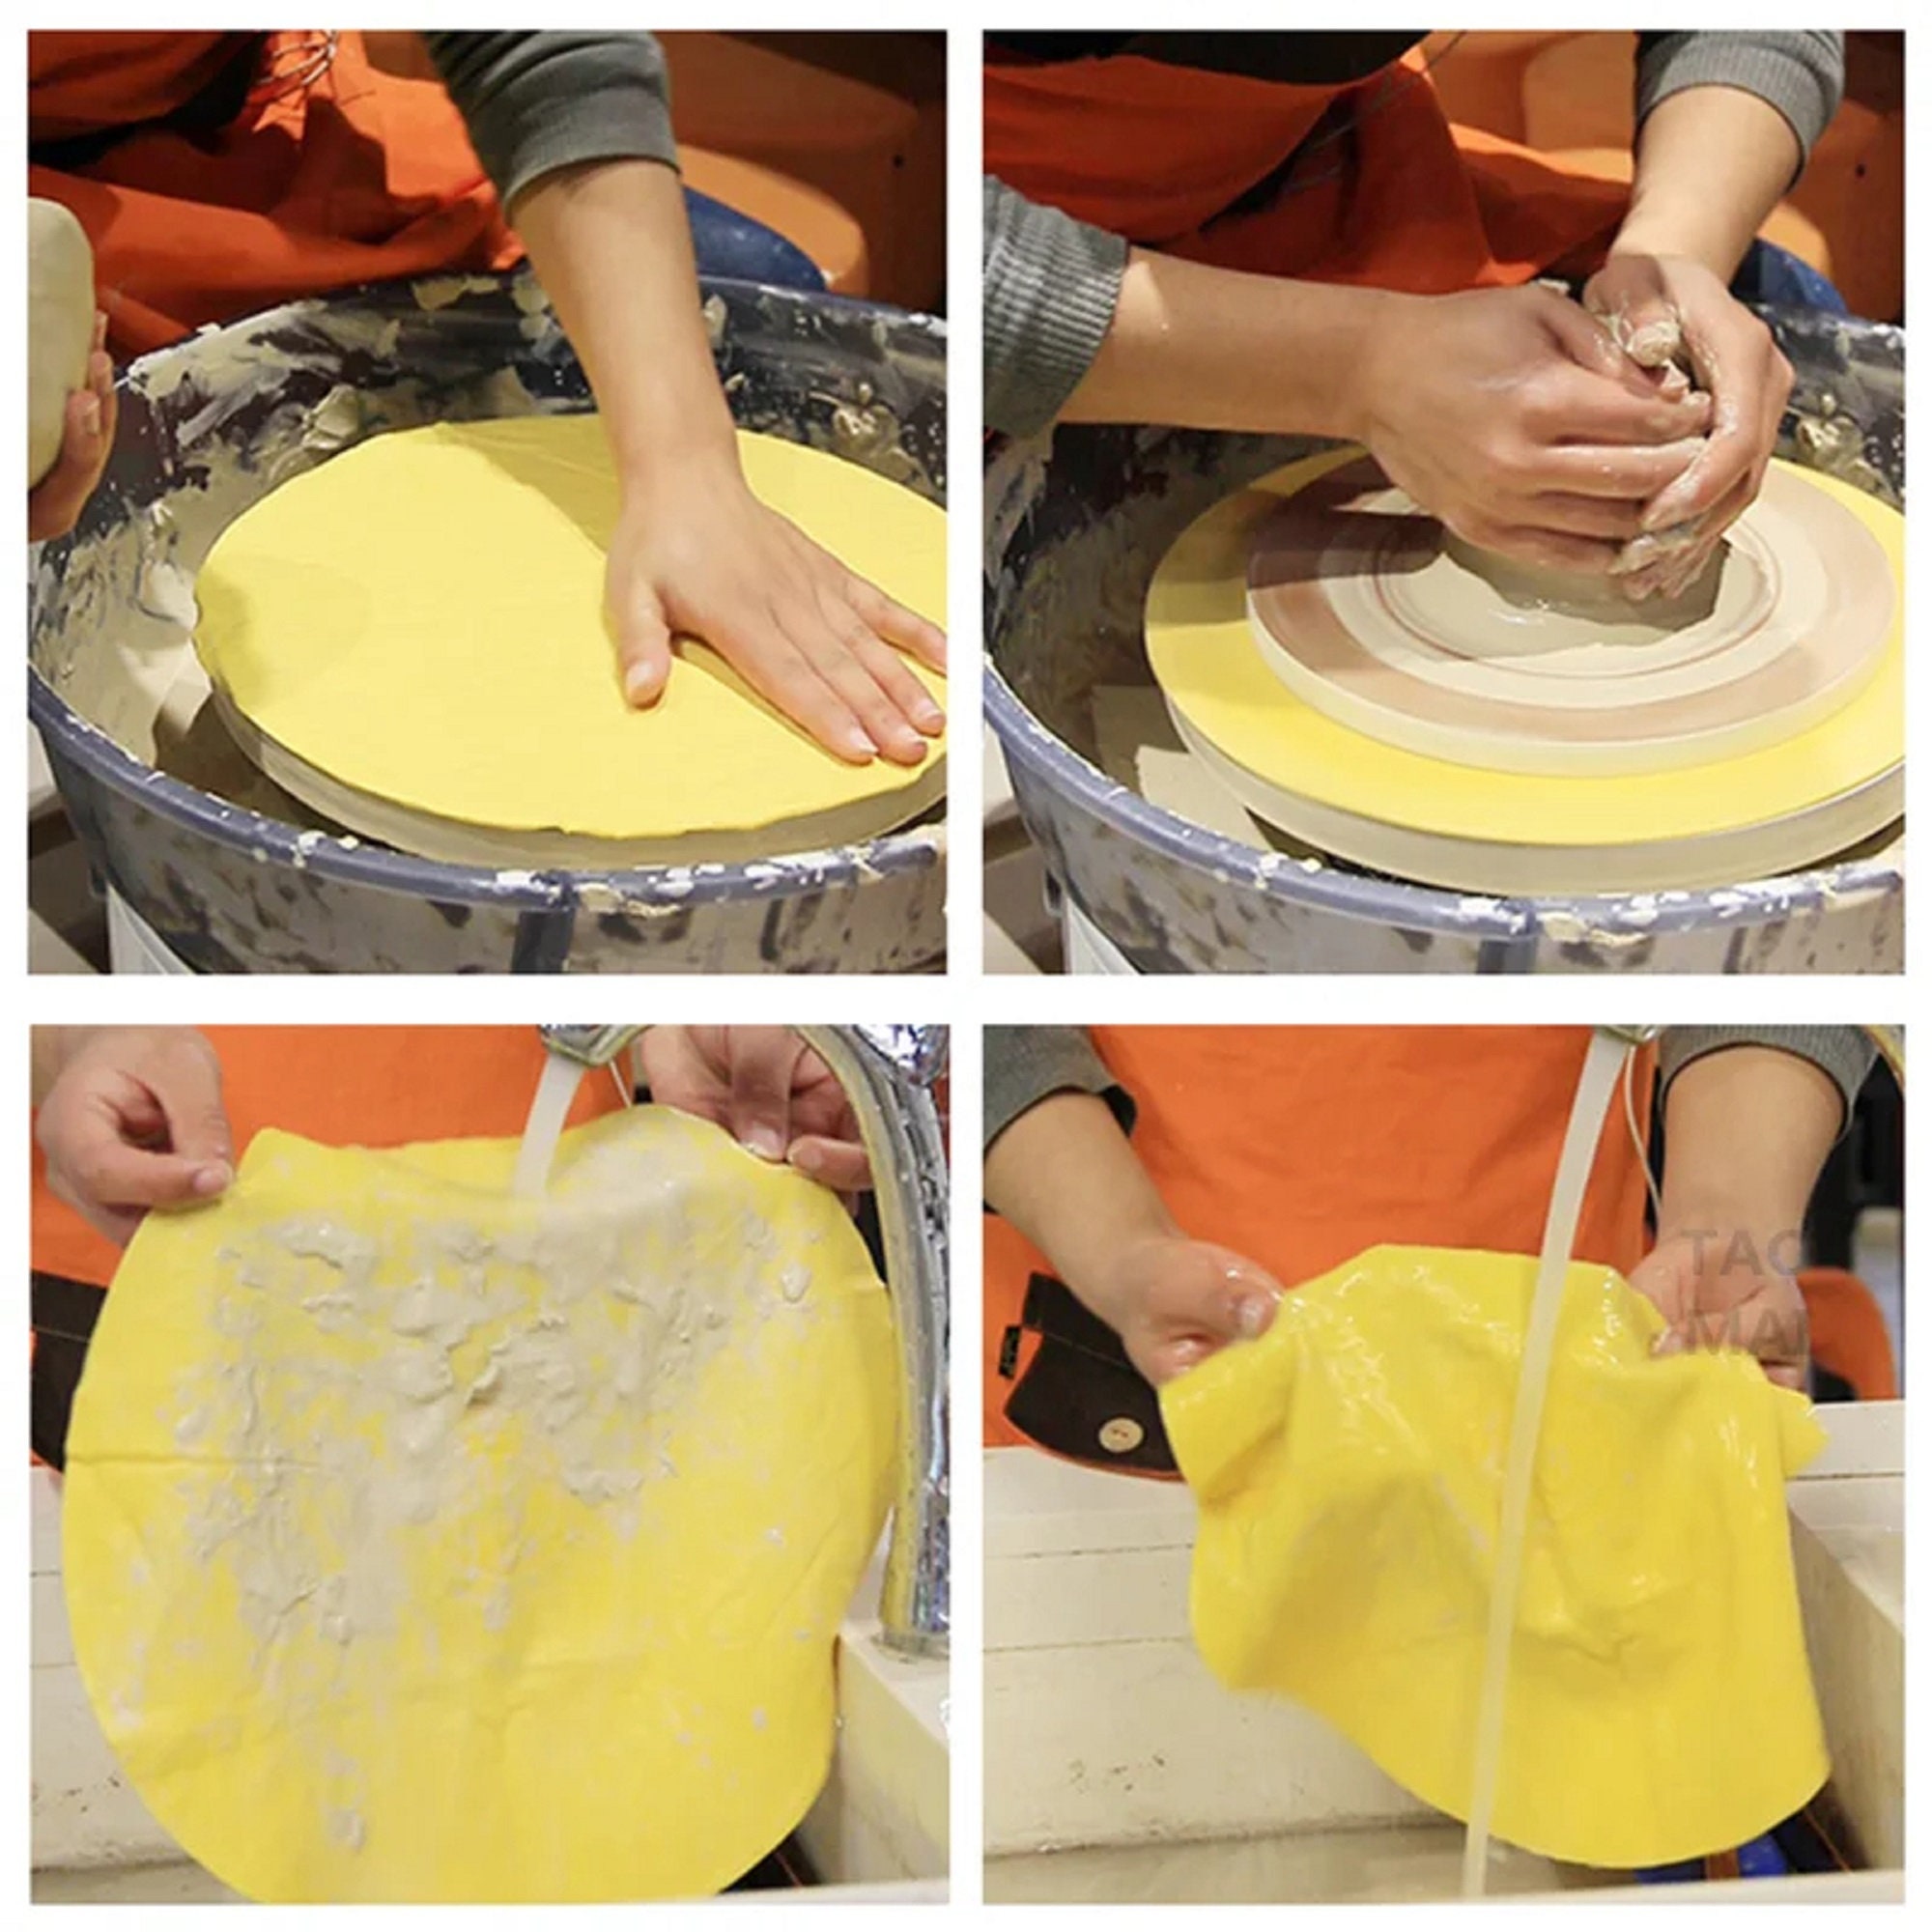 homepage - Easybats - Pottery Bats for potters wheel + other  ceramics equipment.